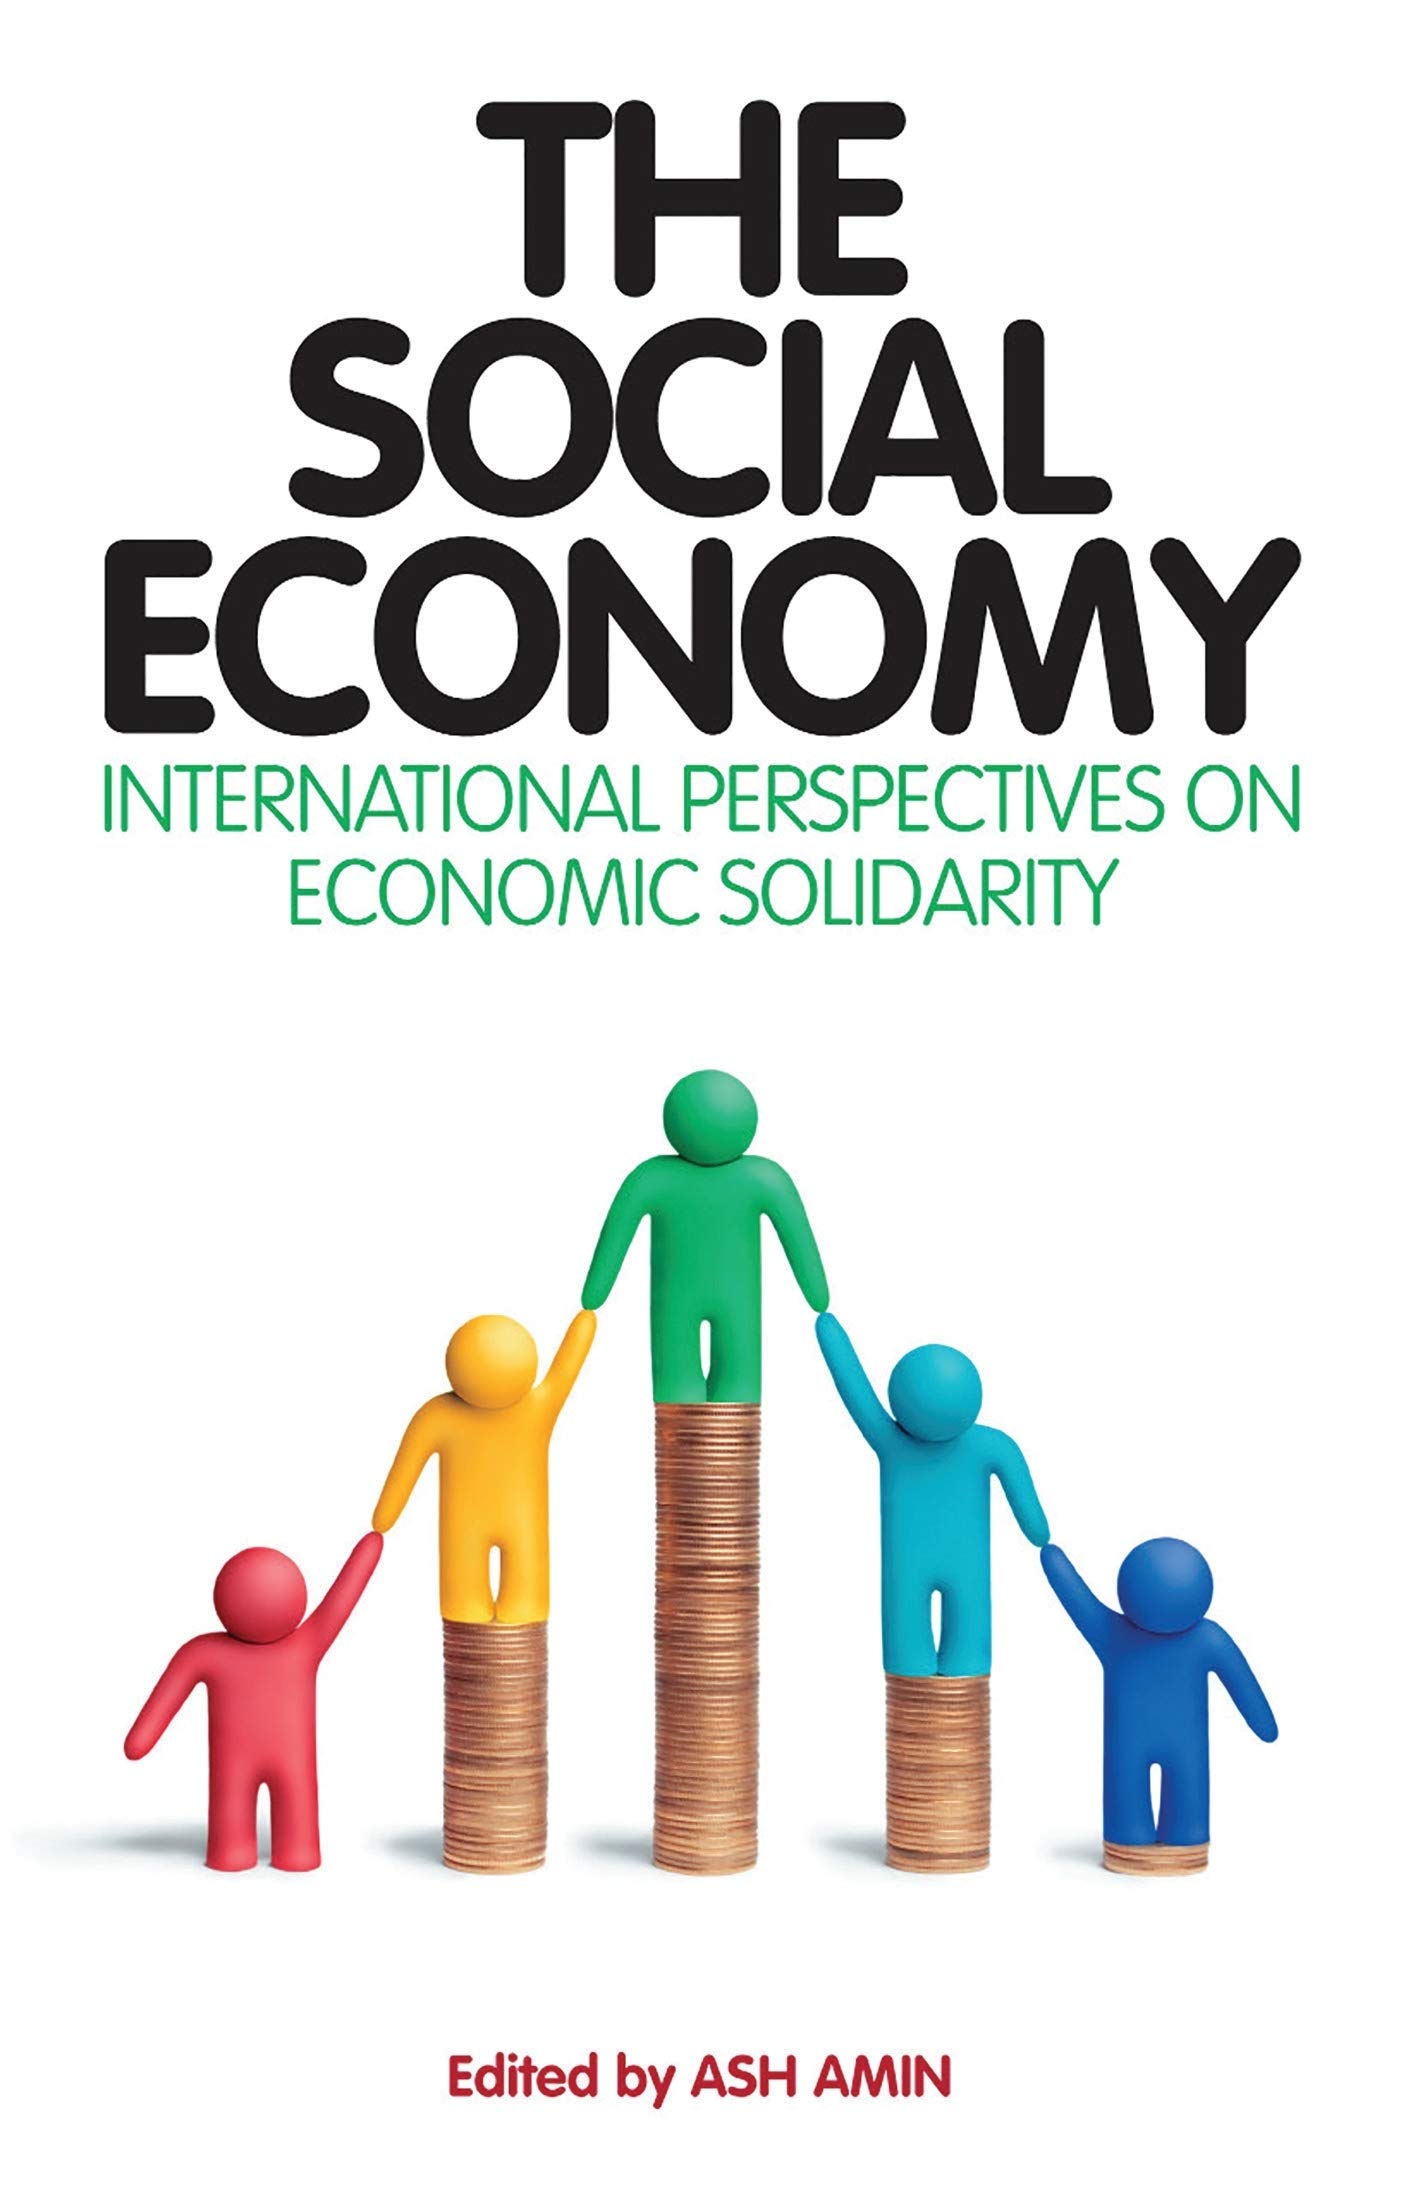 thesis social economic